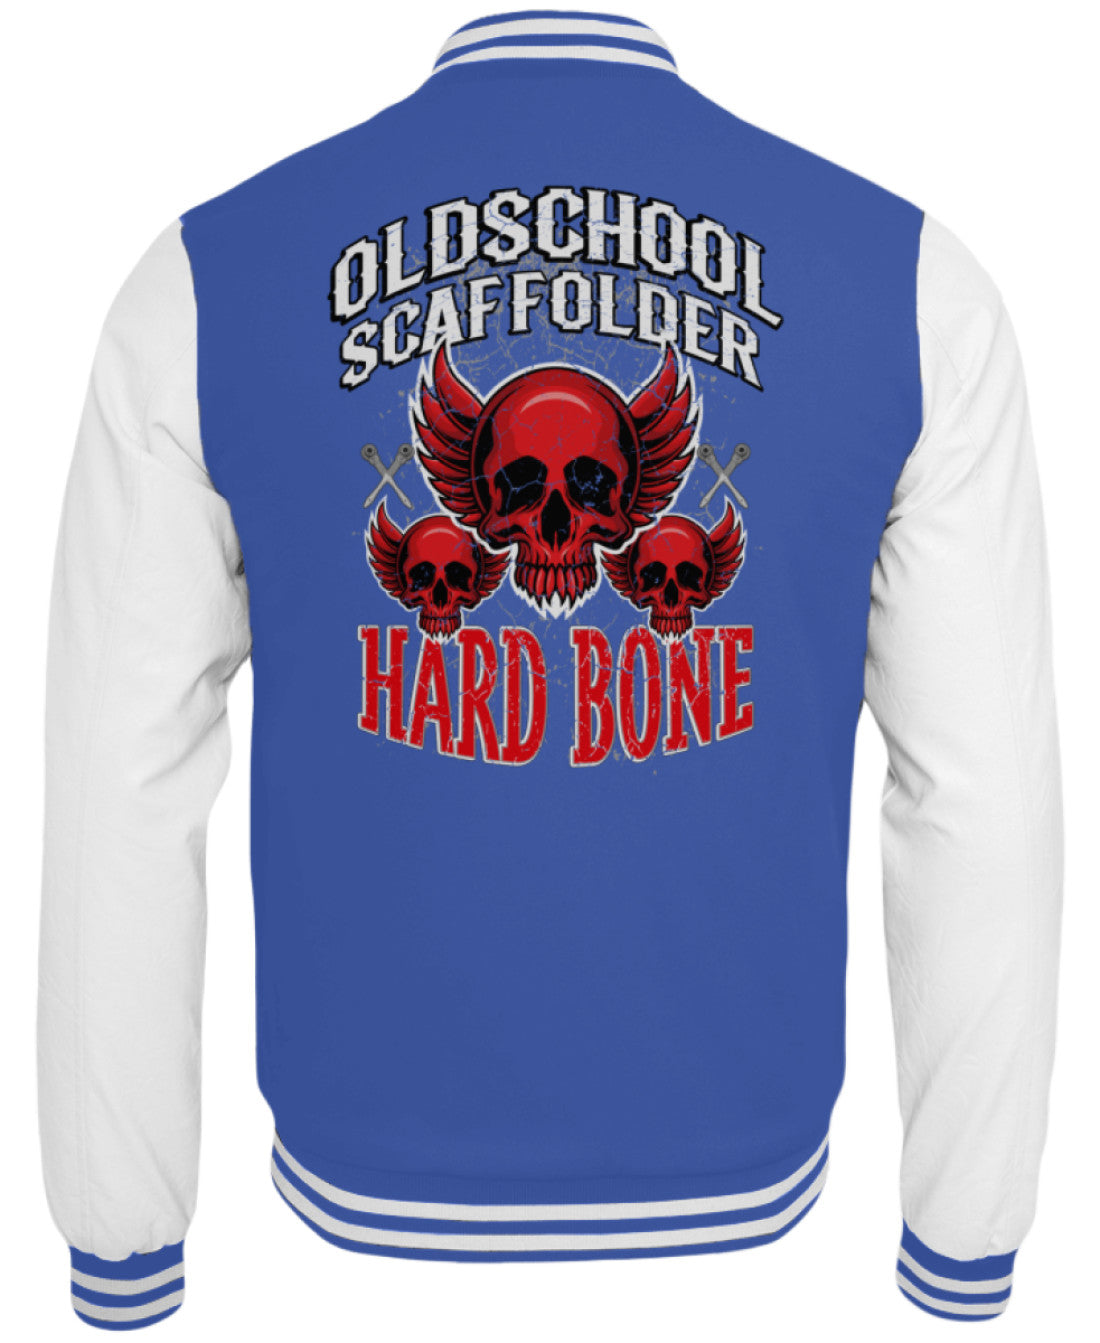 Hard Bone €59.95 Gerüstbauer - Shop >>